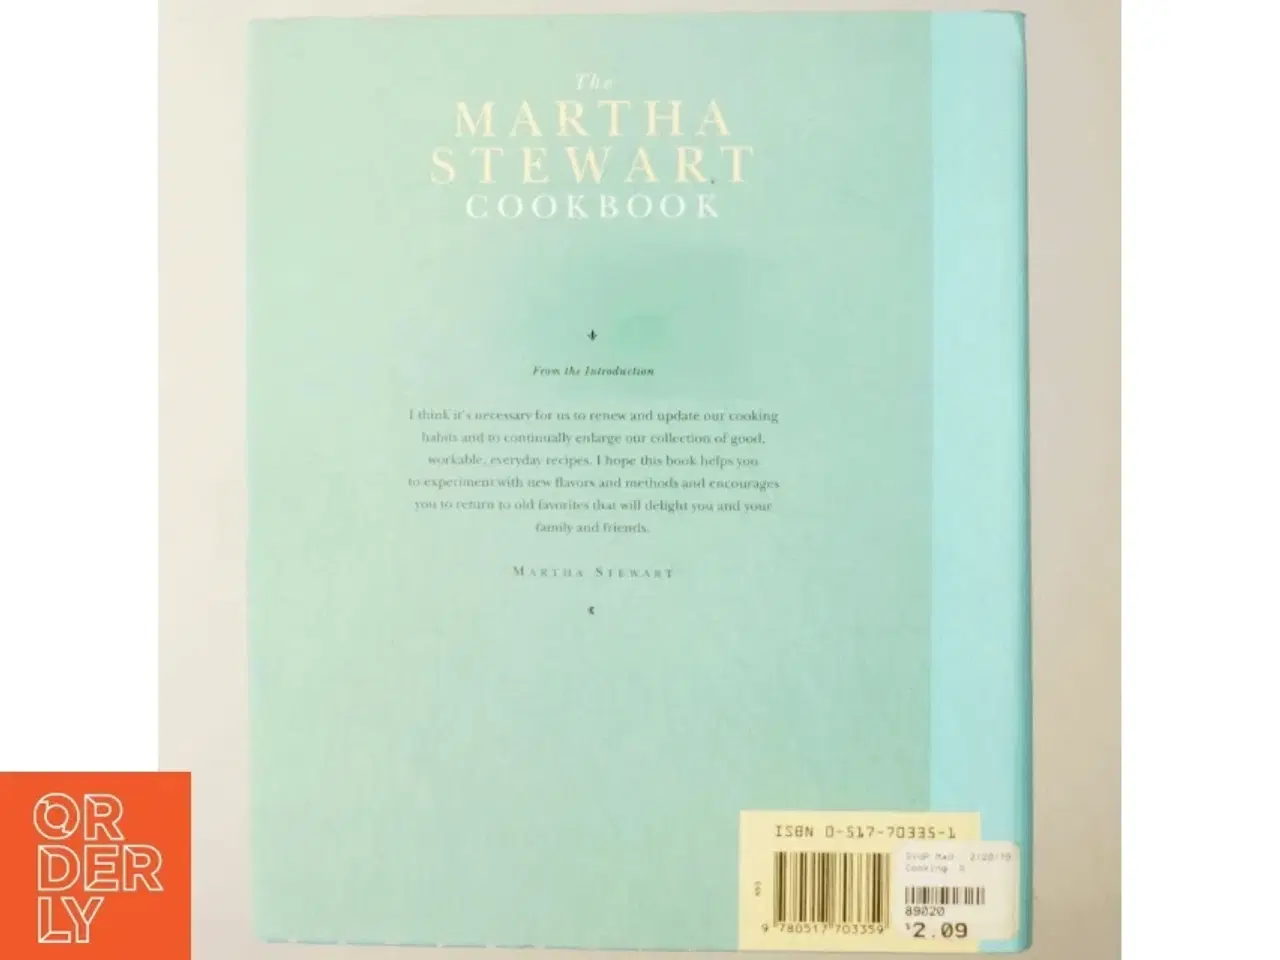 Billede 3 - The Martha Stewart Cookbook af Martha Stewart (Bog)